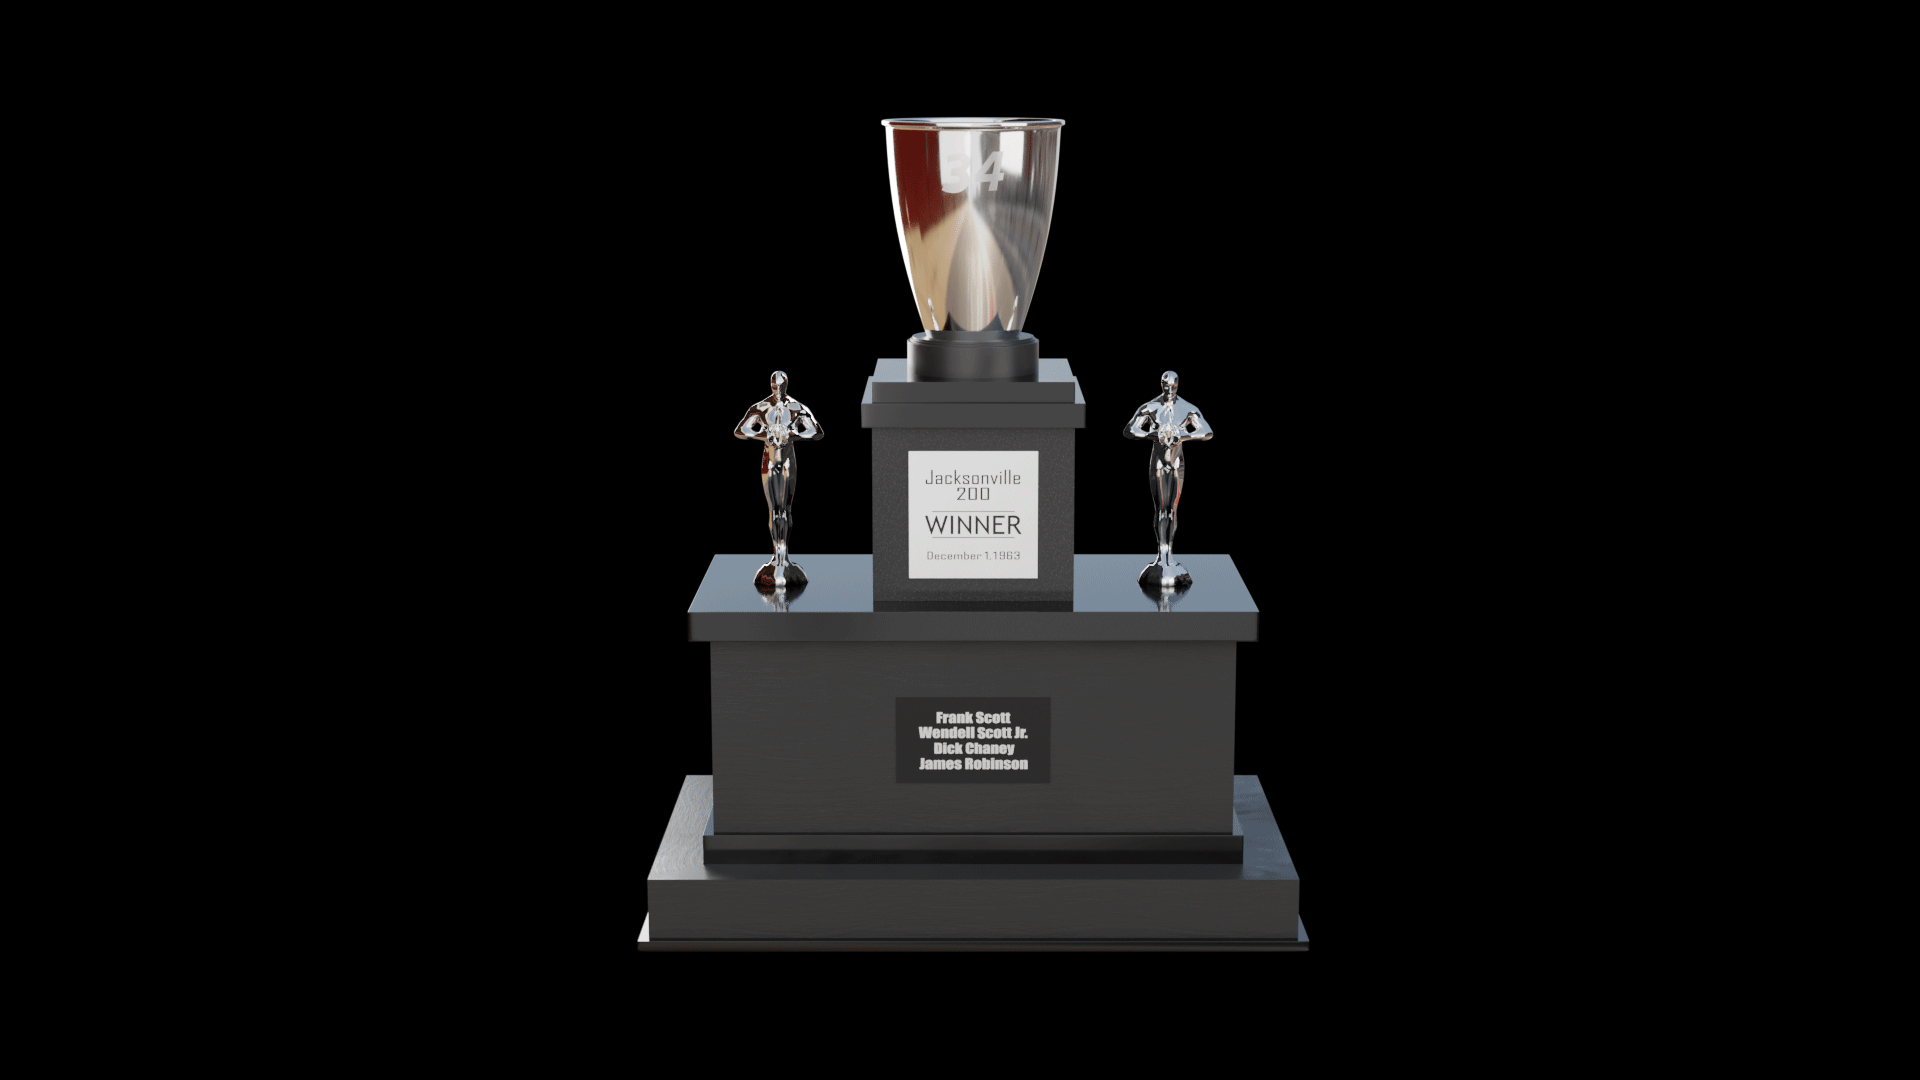 Wendell Scott: Digital Assets - Trophy